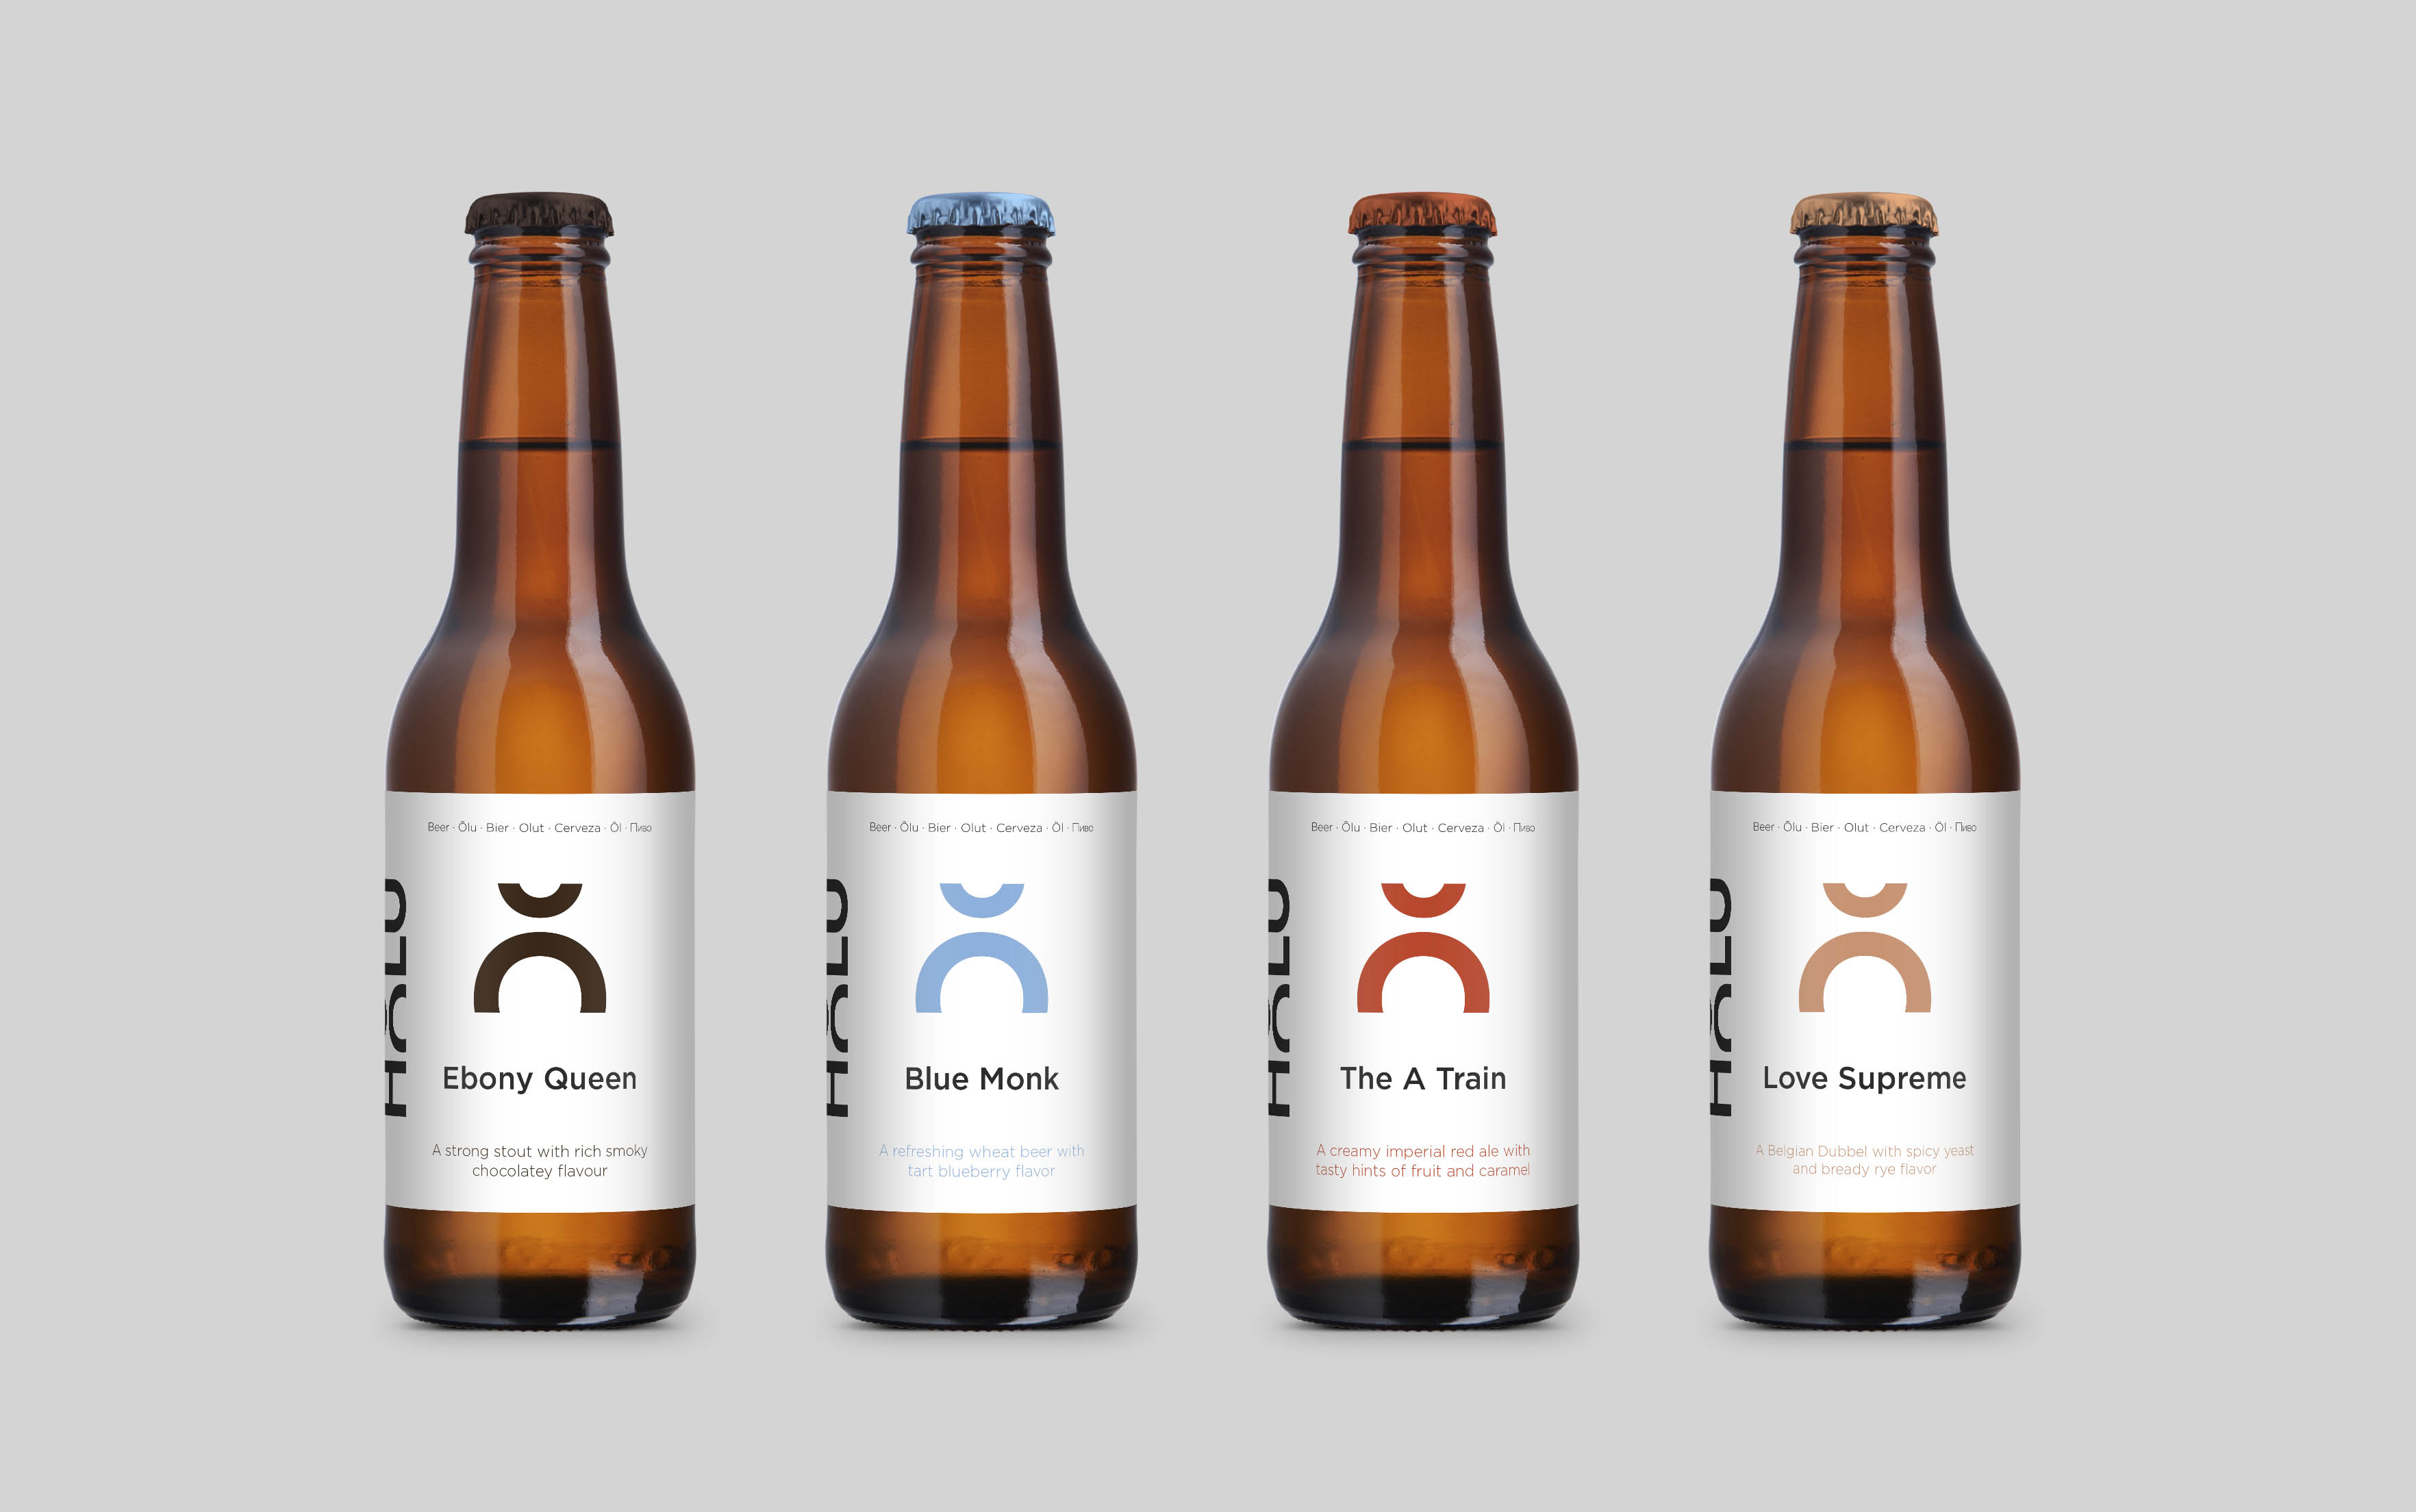 https://site.no11.ee/wp-content/uploads/2018/03/No11_Hõlu_beer-bottle-packaging-design.jpg